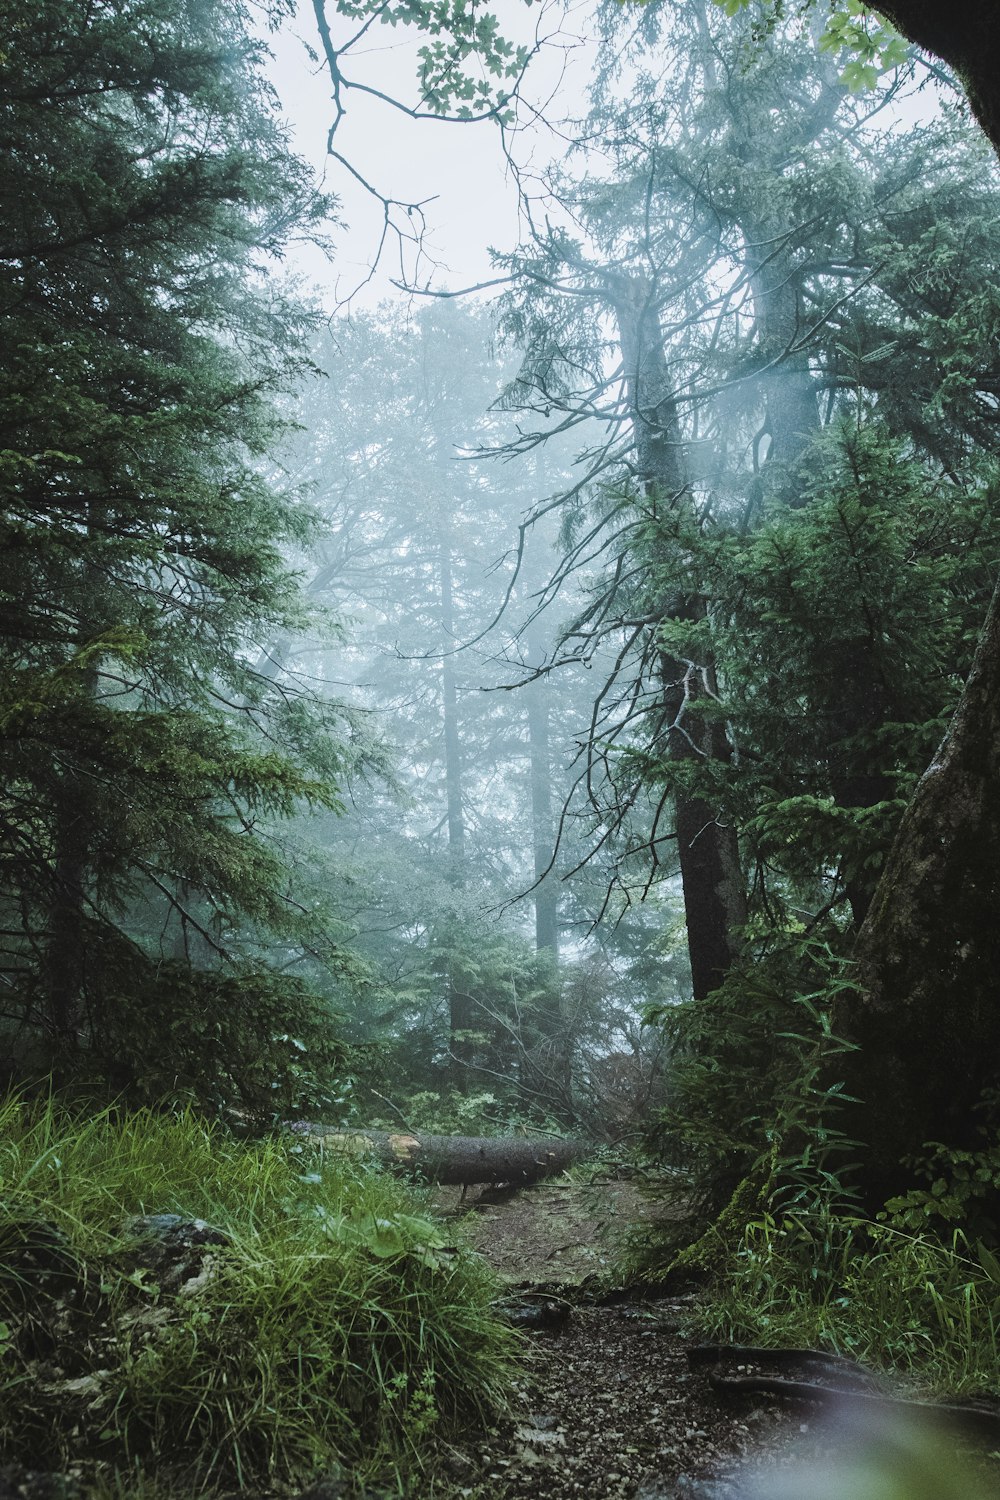 a path through a dense forest on a foggy day